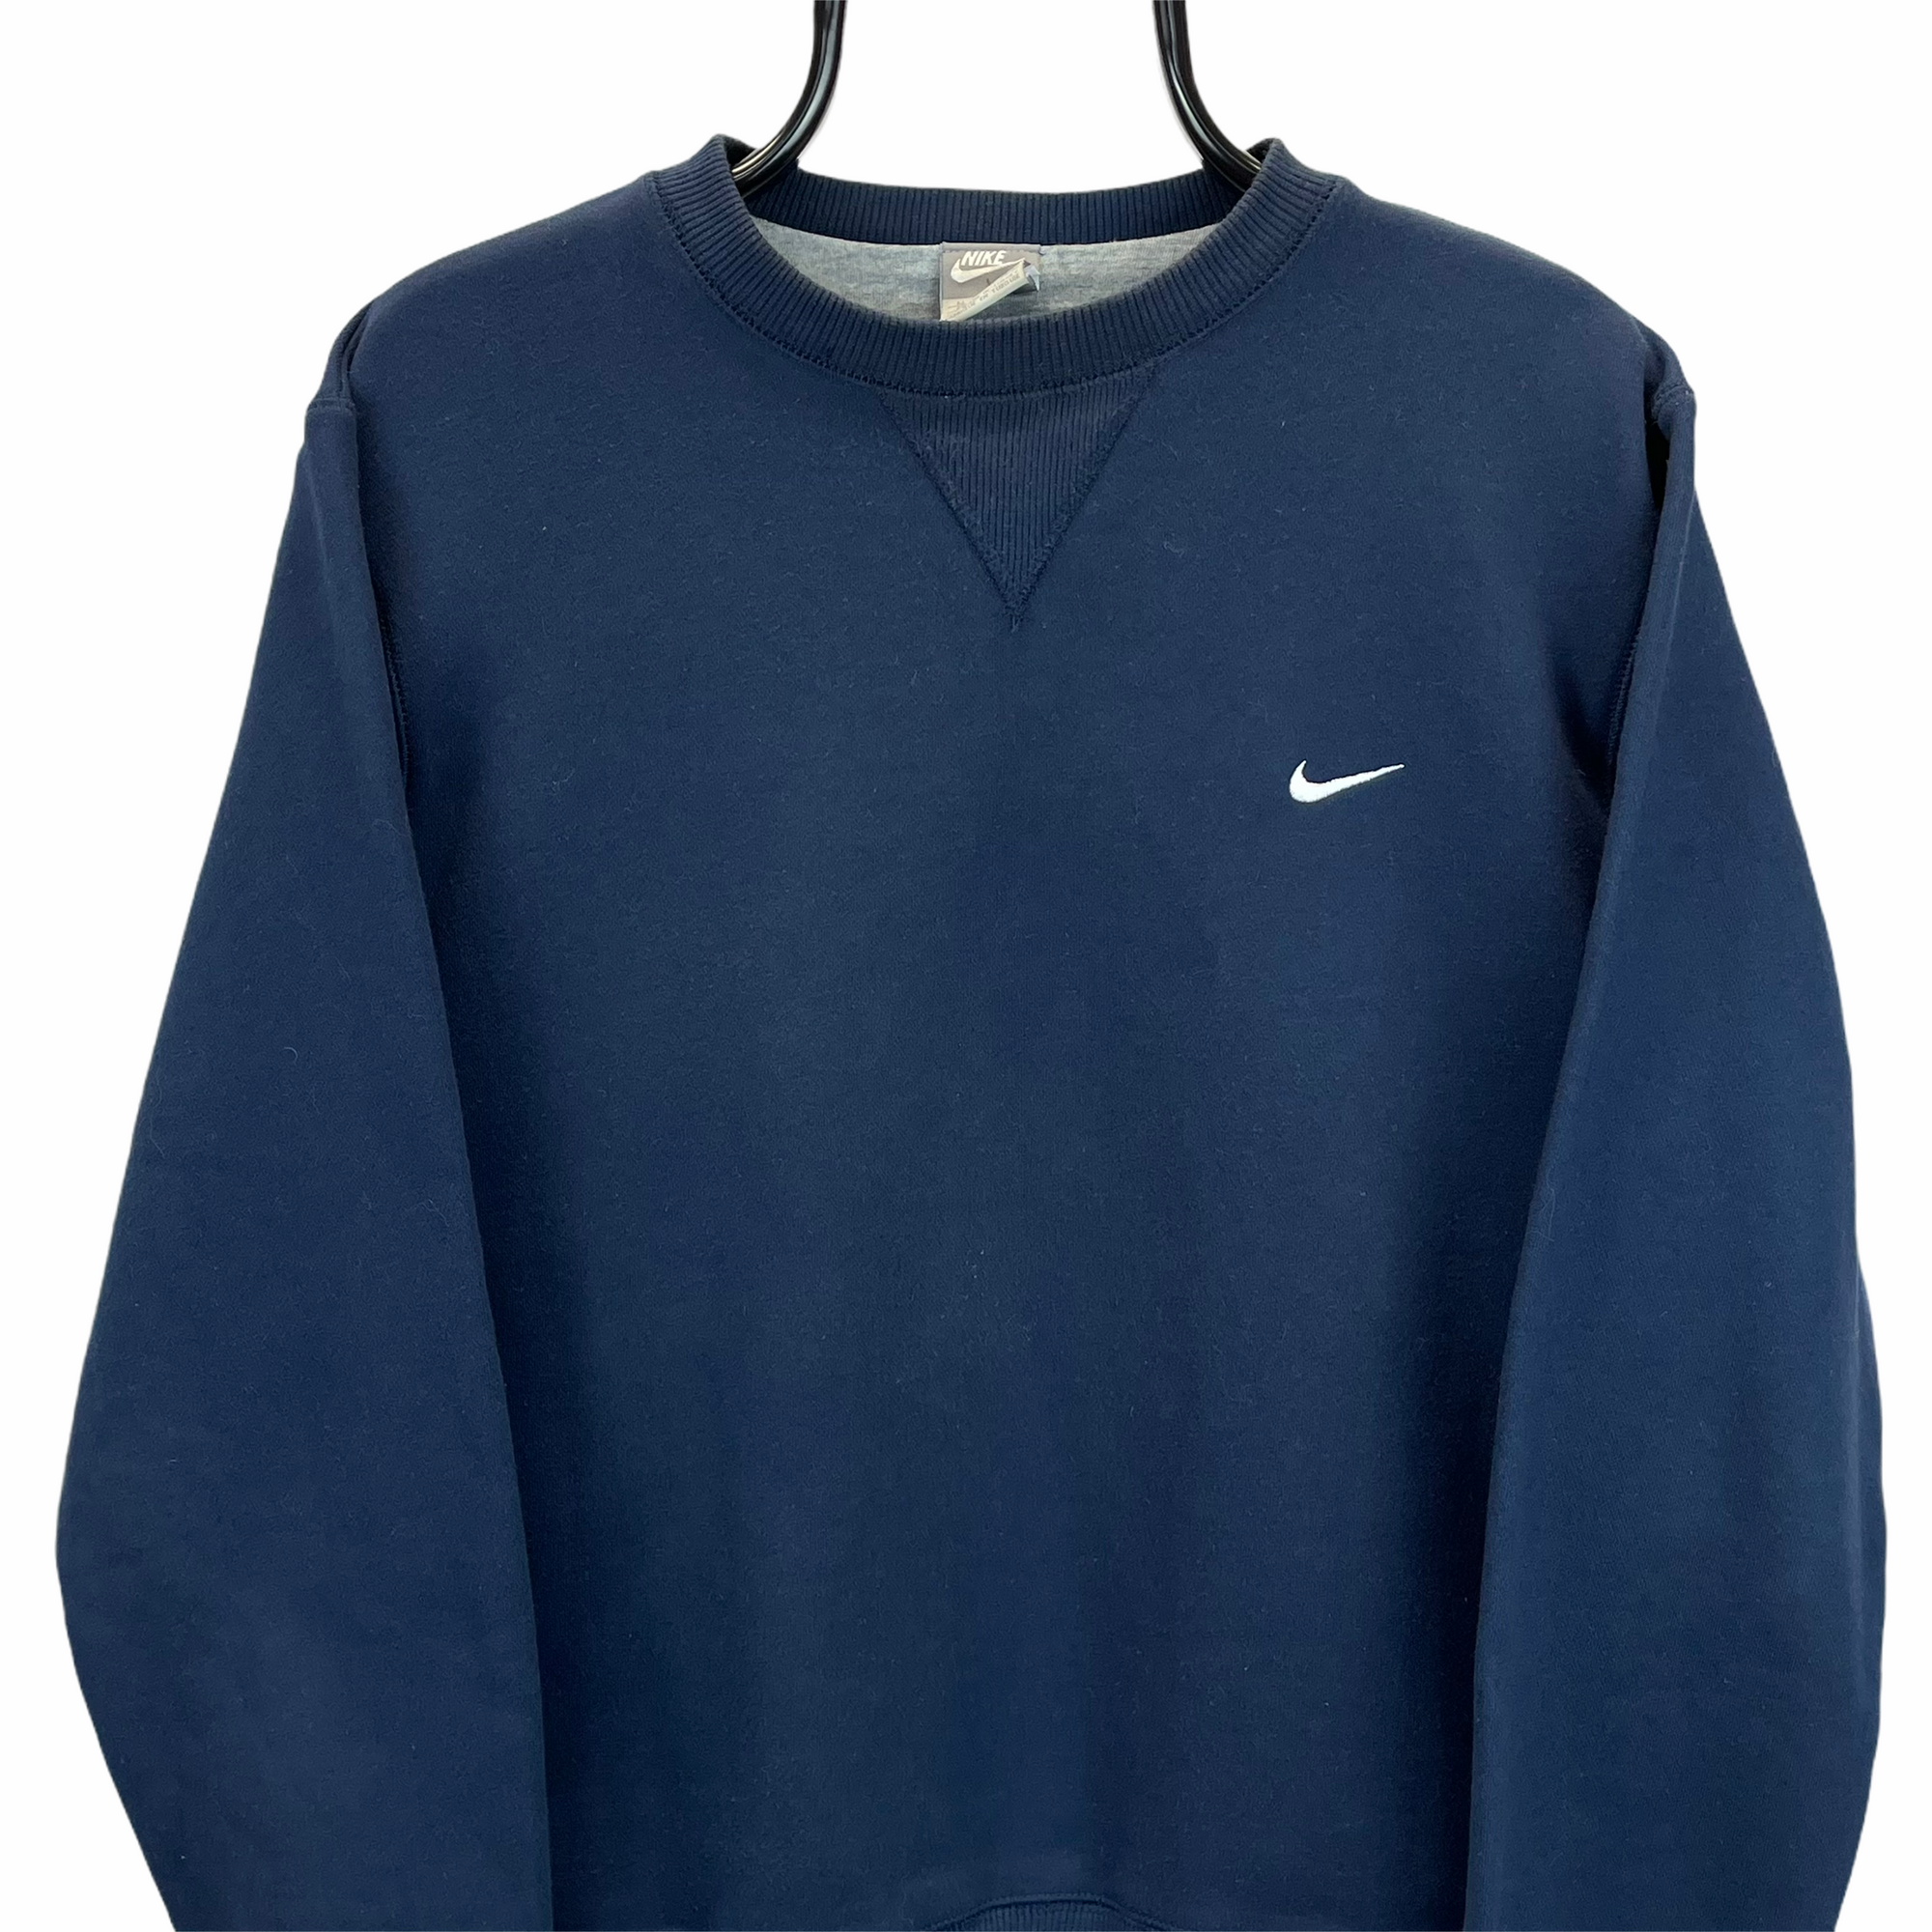 Vintage Nike Embroidered Small Swoosh Sweatshirt in Navy - Men's Medium/Women's Large